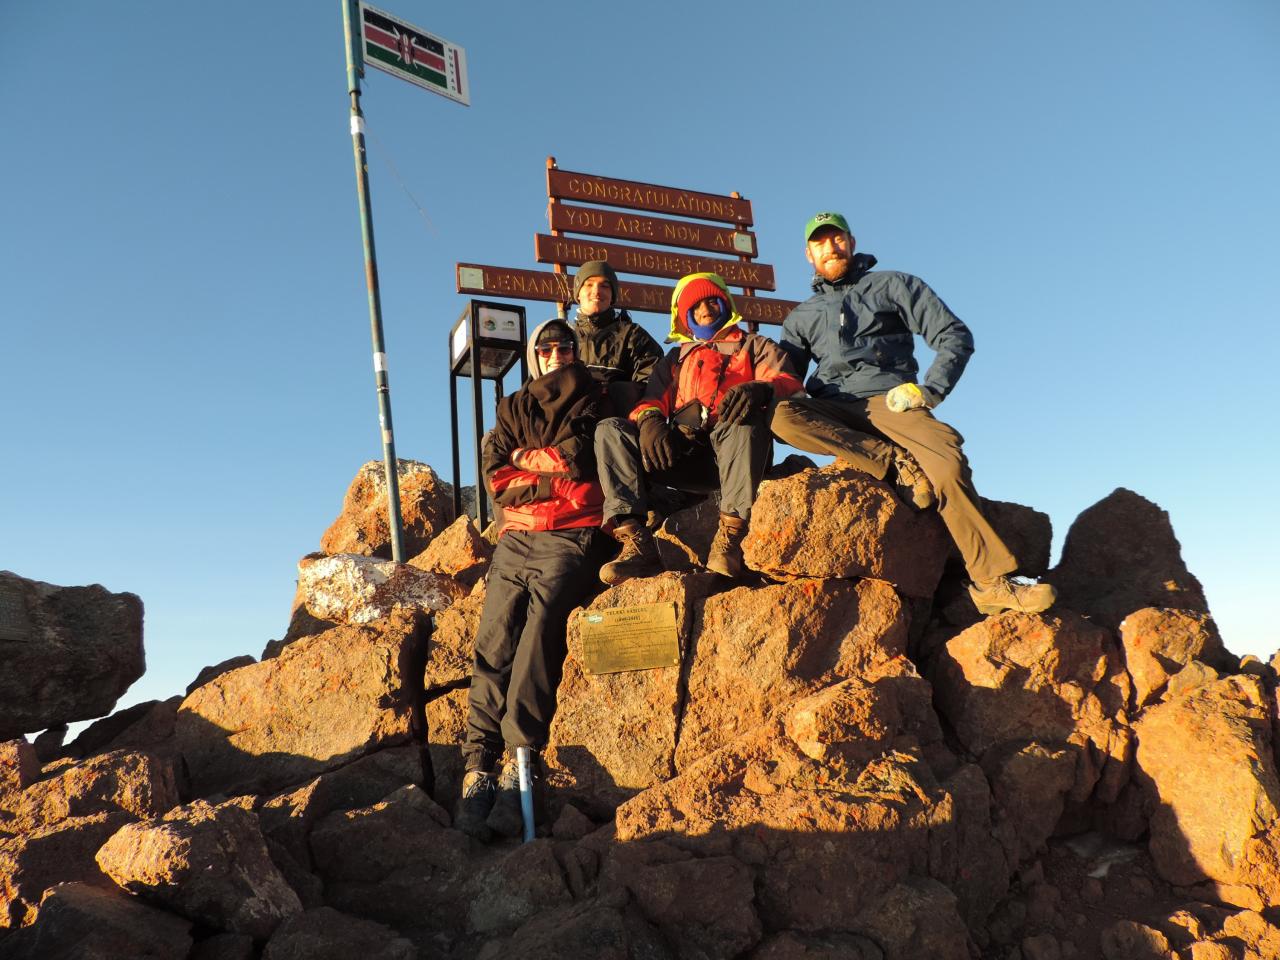 Mount Kenya Climbing, Mountain Adventures,Trekking,Hiking Expeditions.